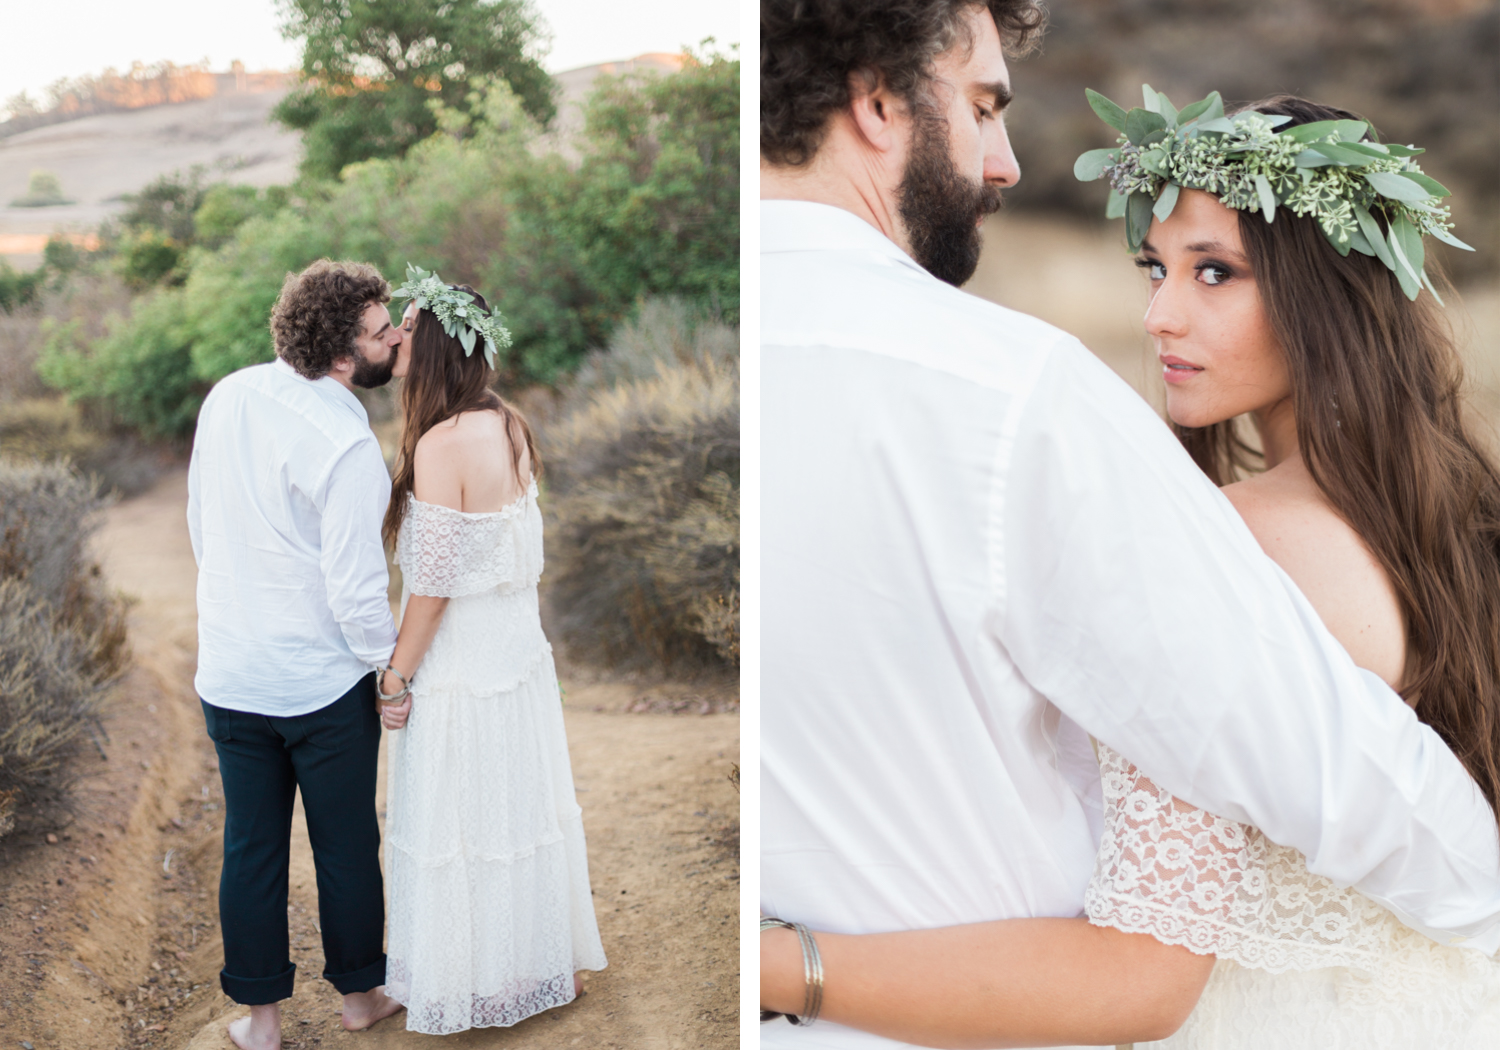 Rustic Bohemian Wedding // Bay Area Photographer // Olivia Richards Photography